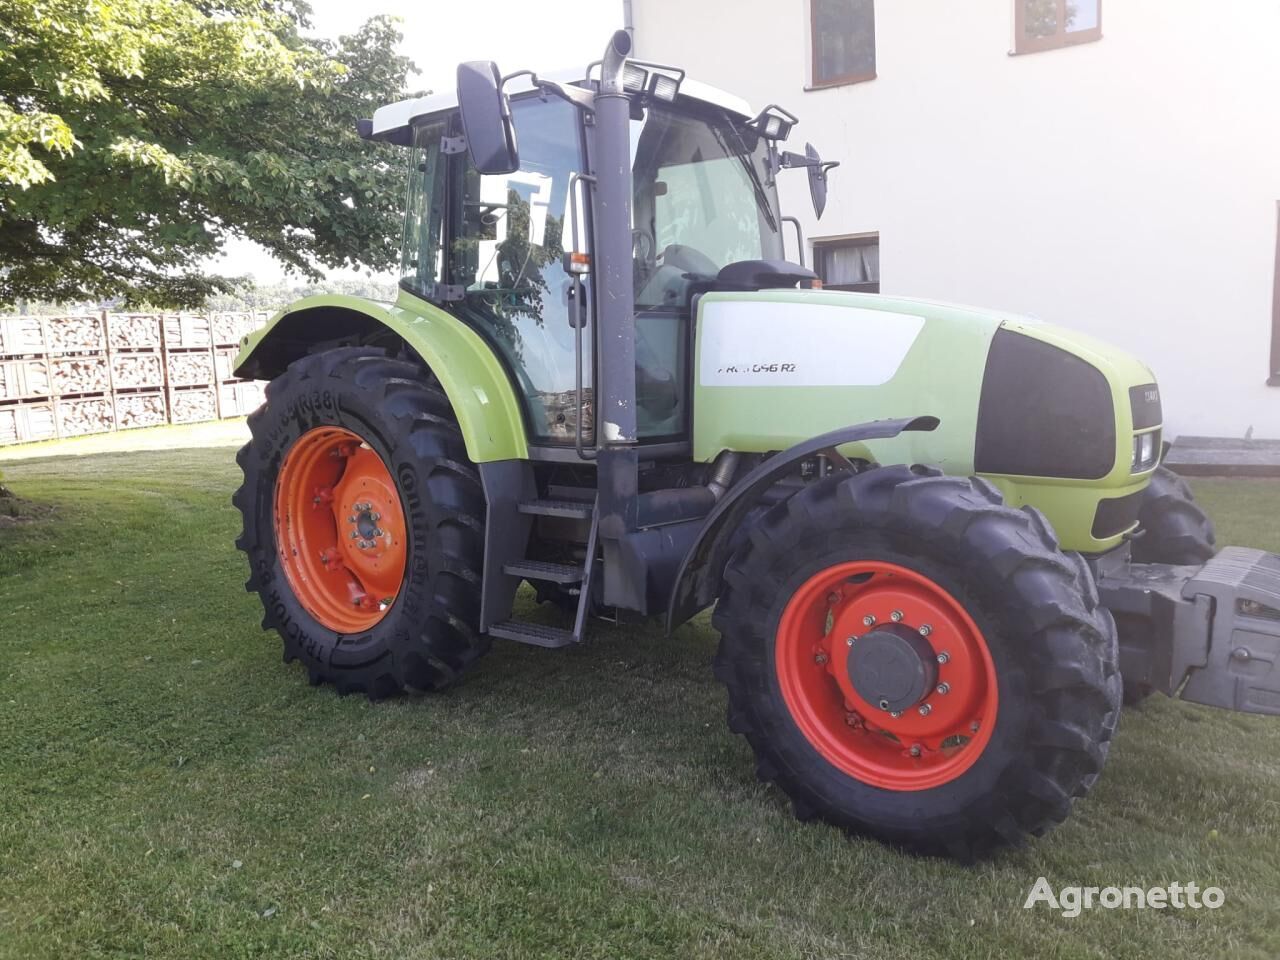 Claas Ares 696 wheel tractor